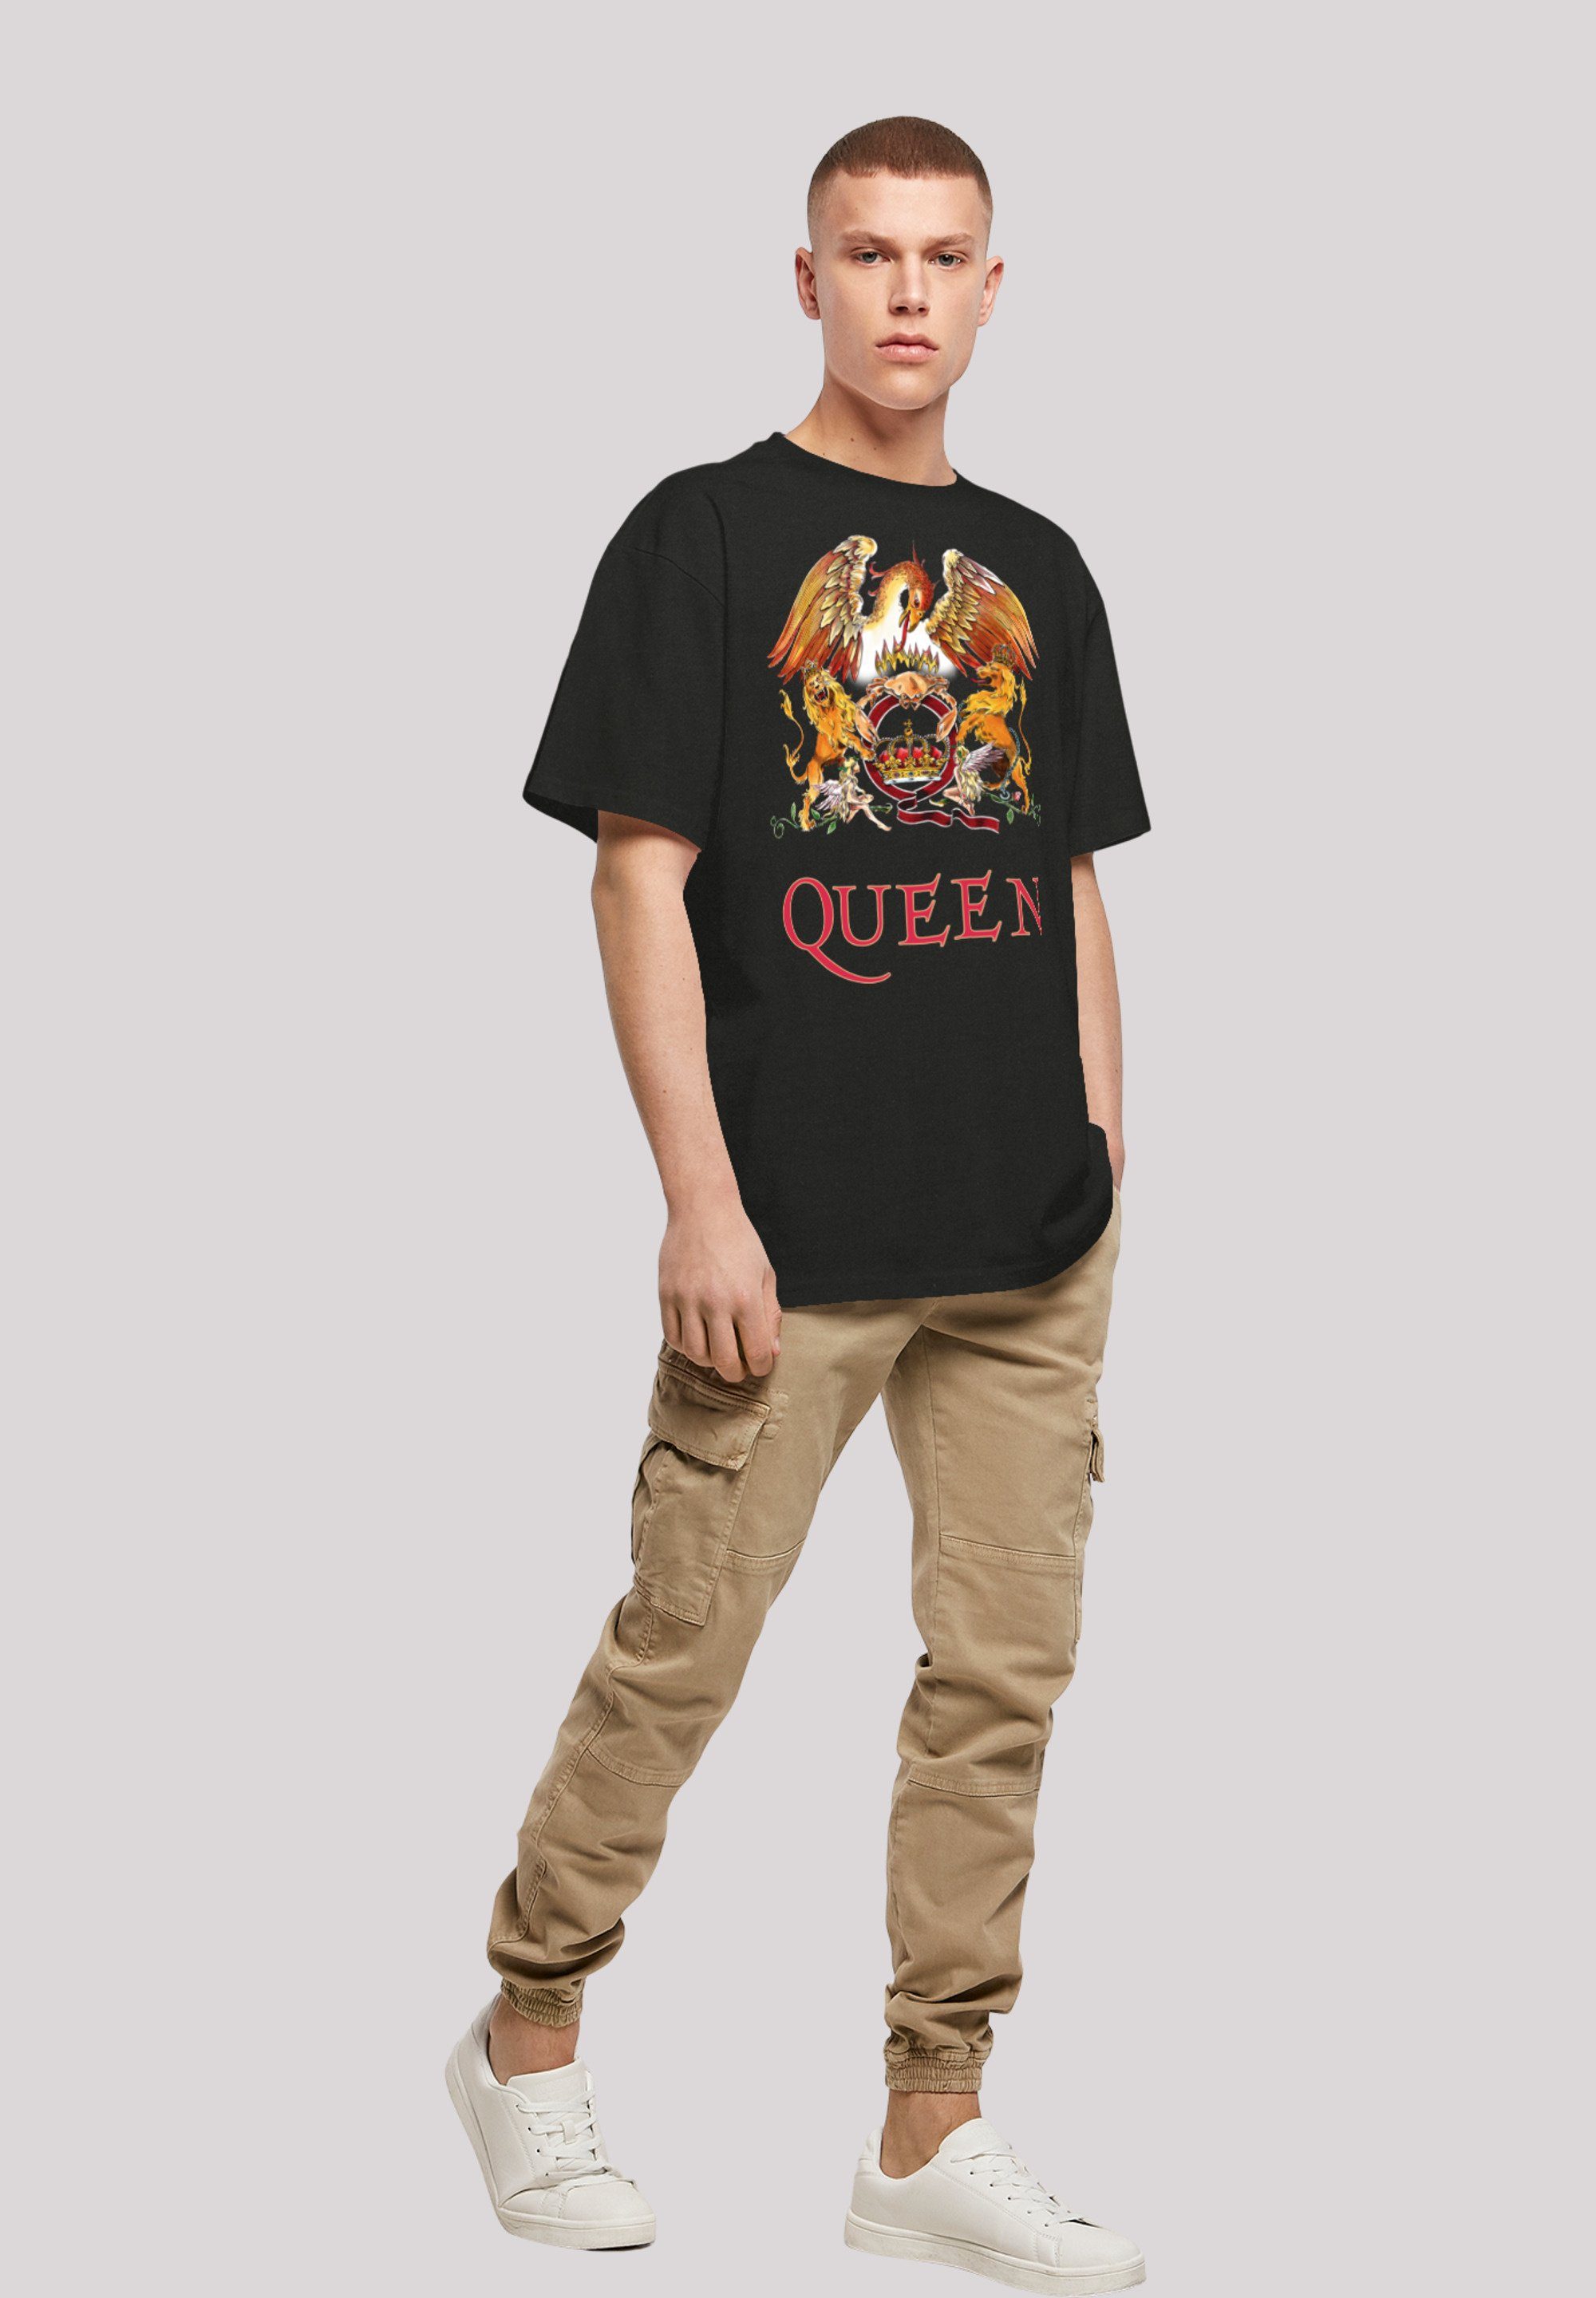 Queen Black T-Shirt F4NT4STIC Print Rockband Crest schwarz Classic